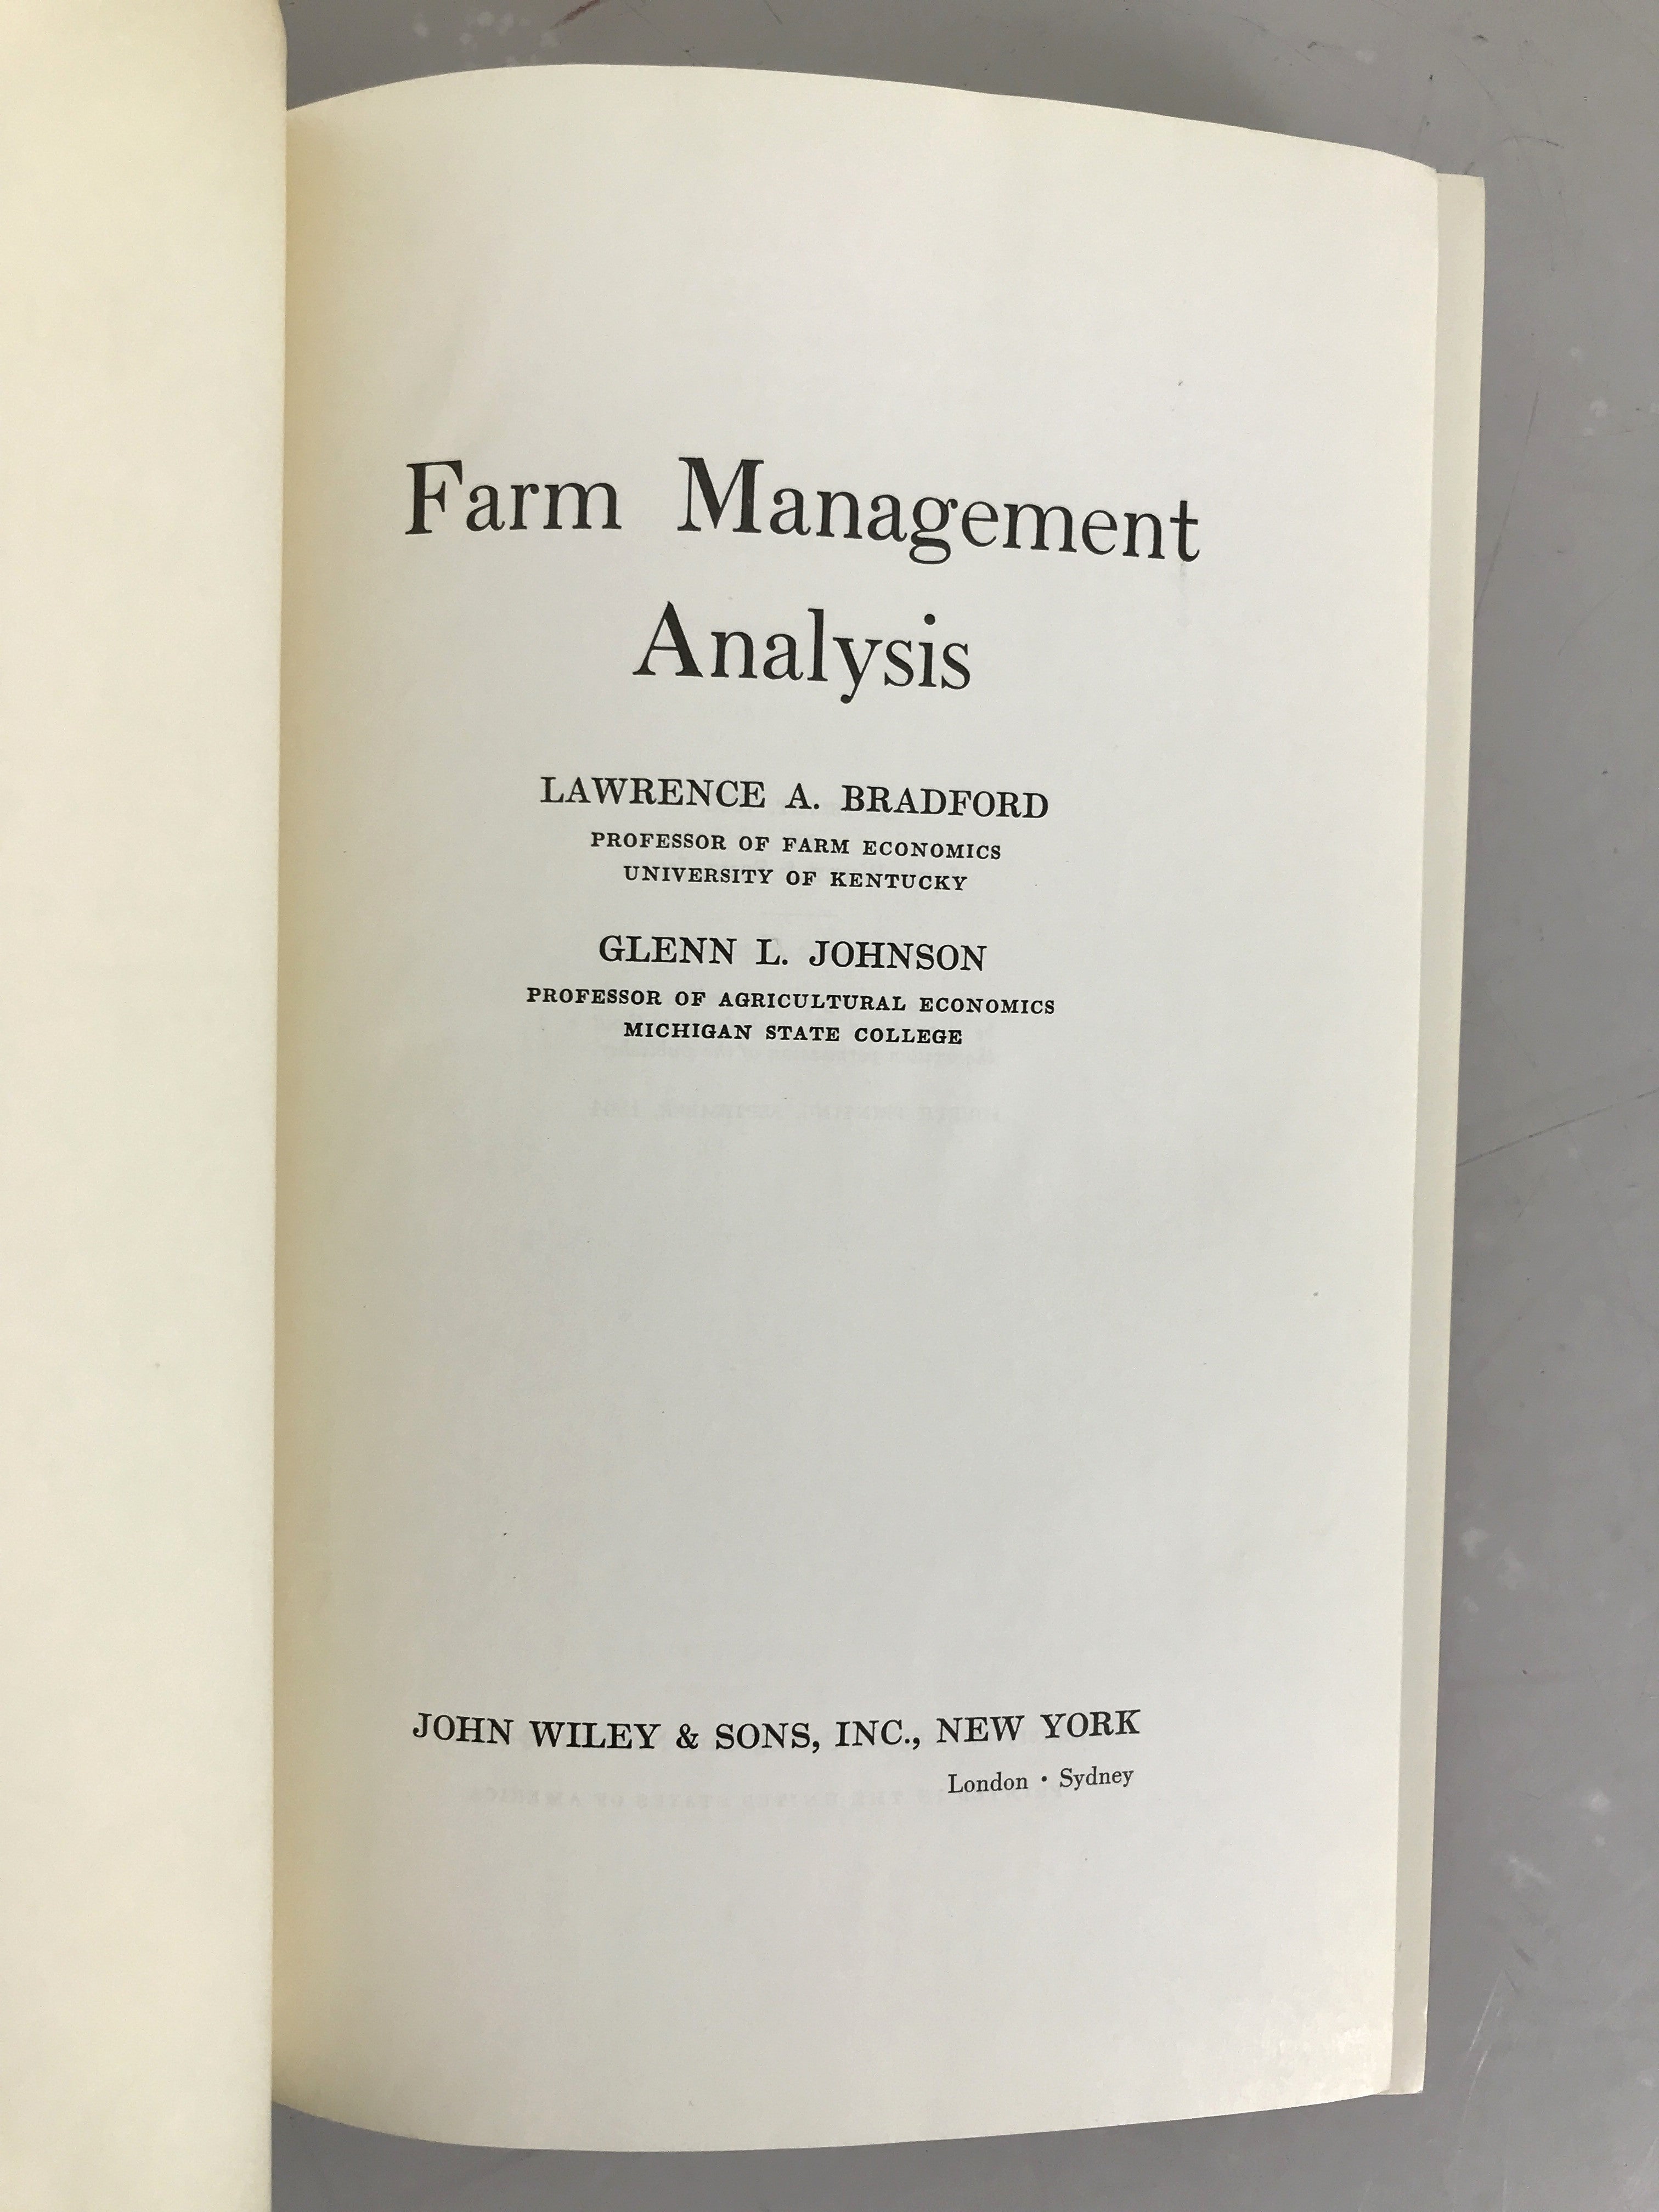 Farm Management Analysis by Bradford and Johnson Fourth Printing 1964 HC